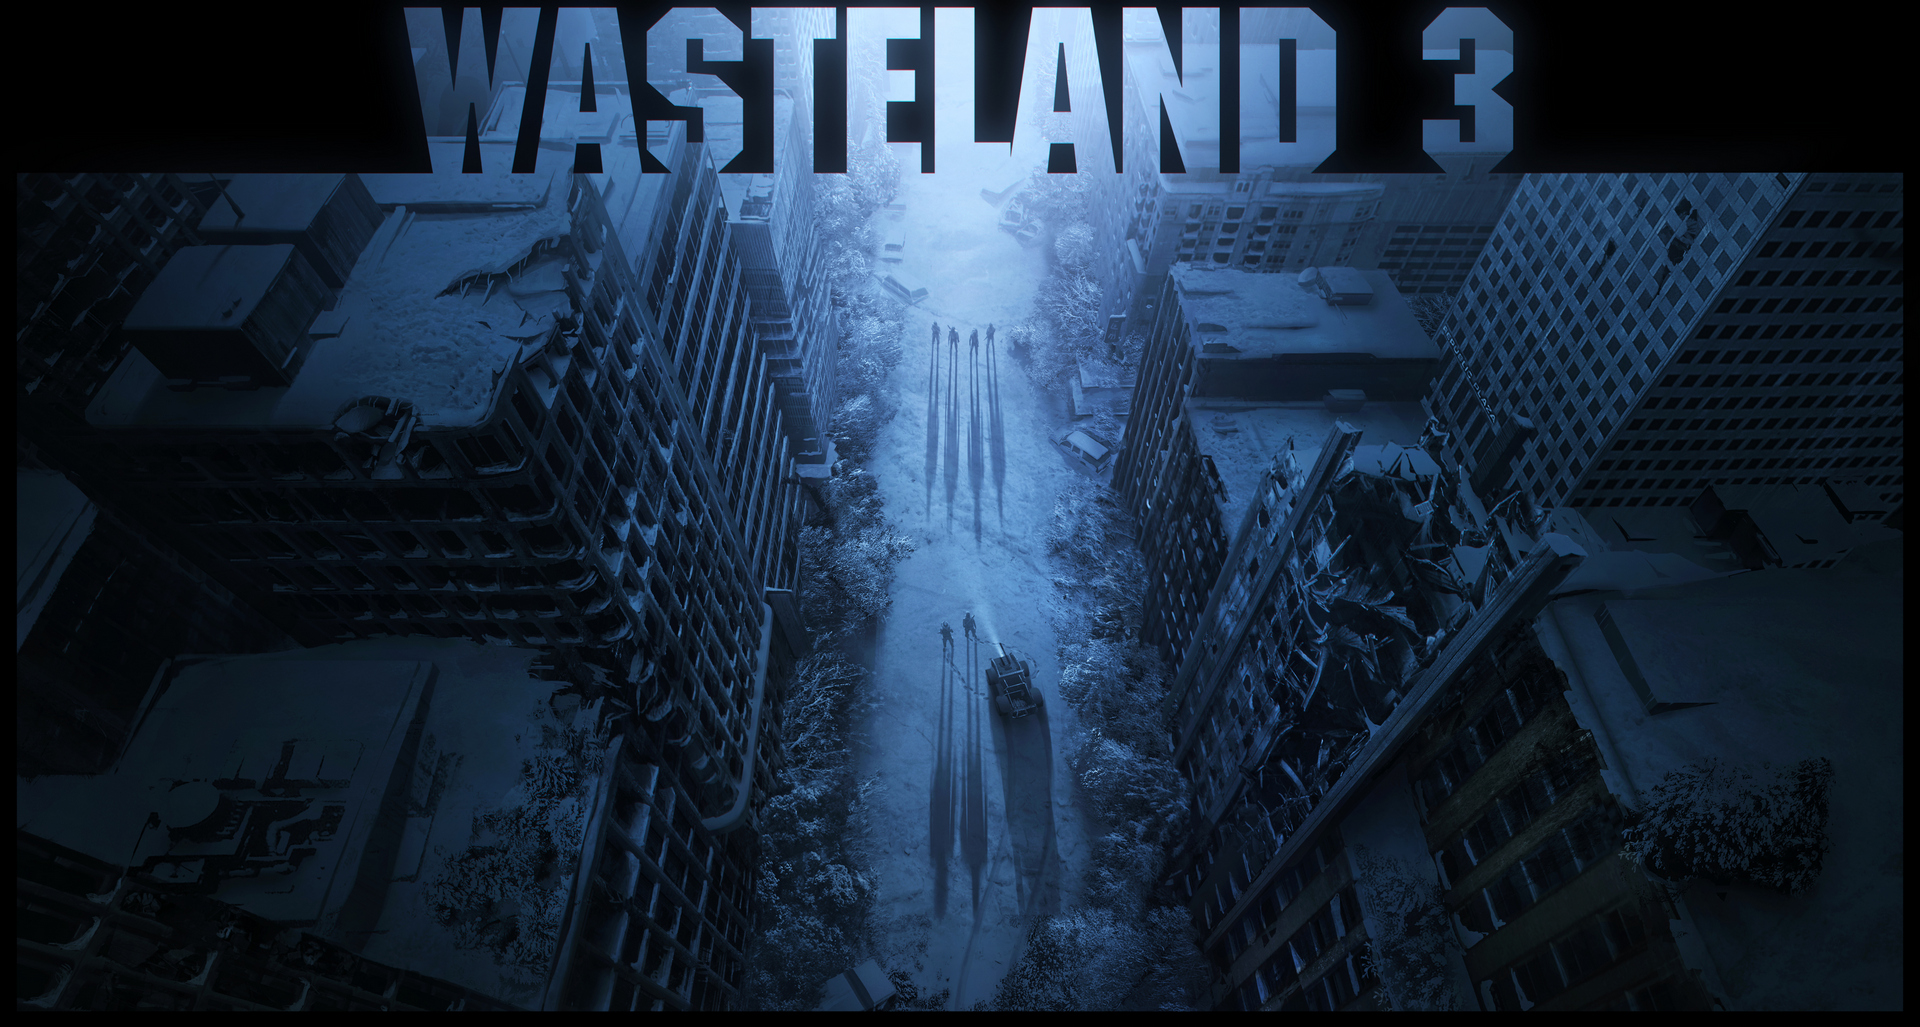 December Humble Choice: Wasteland 3, GreedFall and more